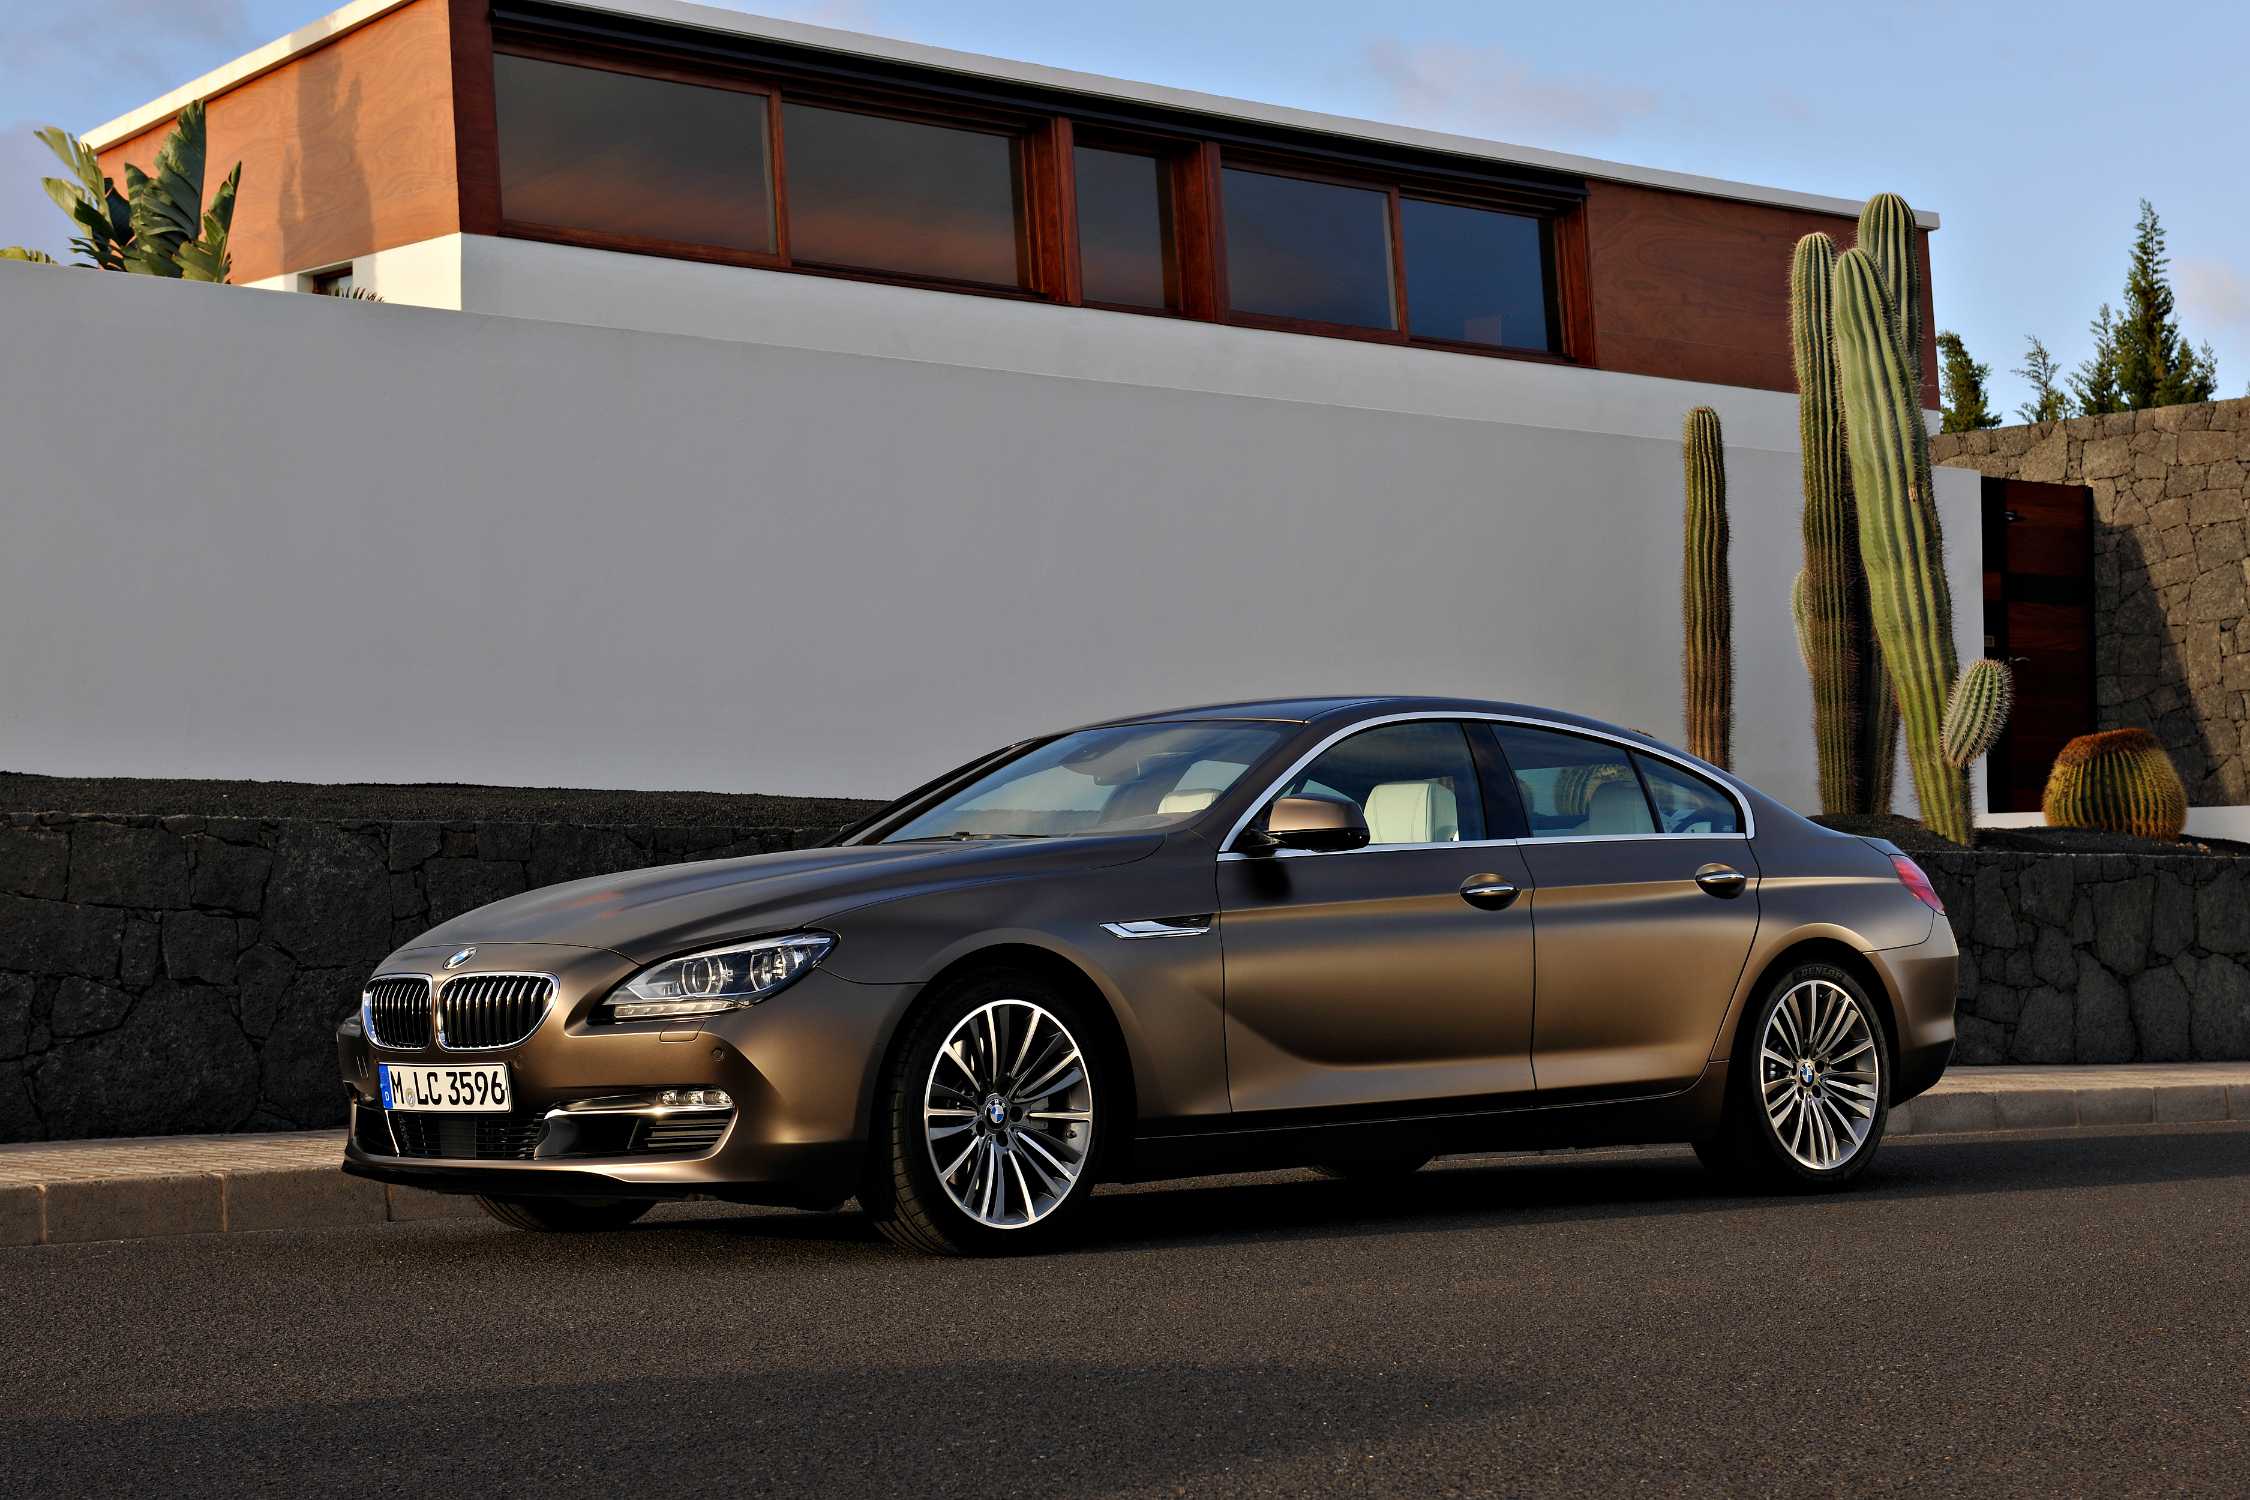 The new BMW 640i Gran Coupe, Exterior: BMW Individual matt Frozen Bronze metallic (12/2011).